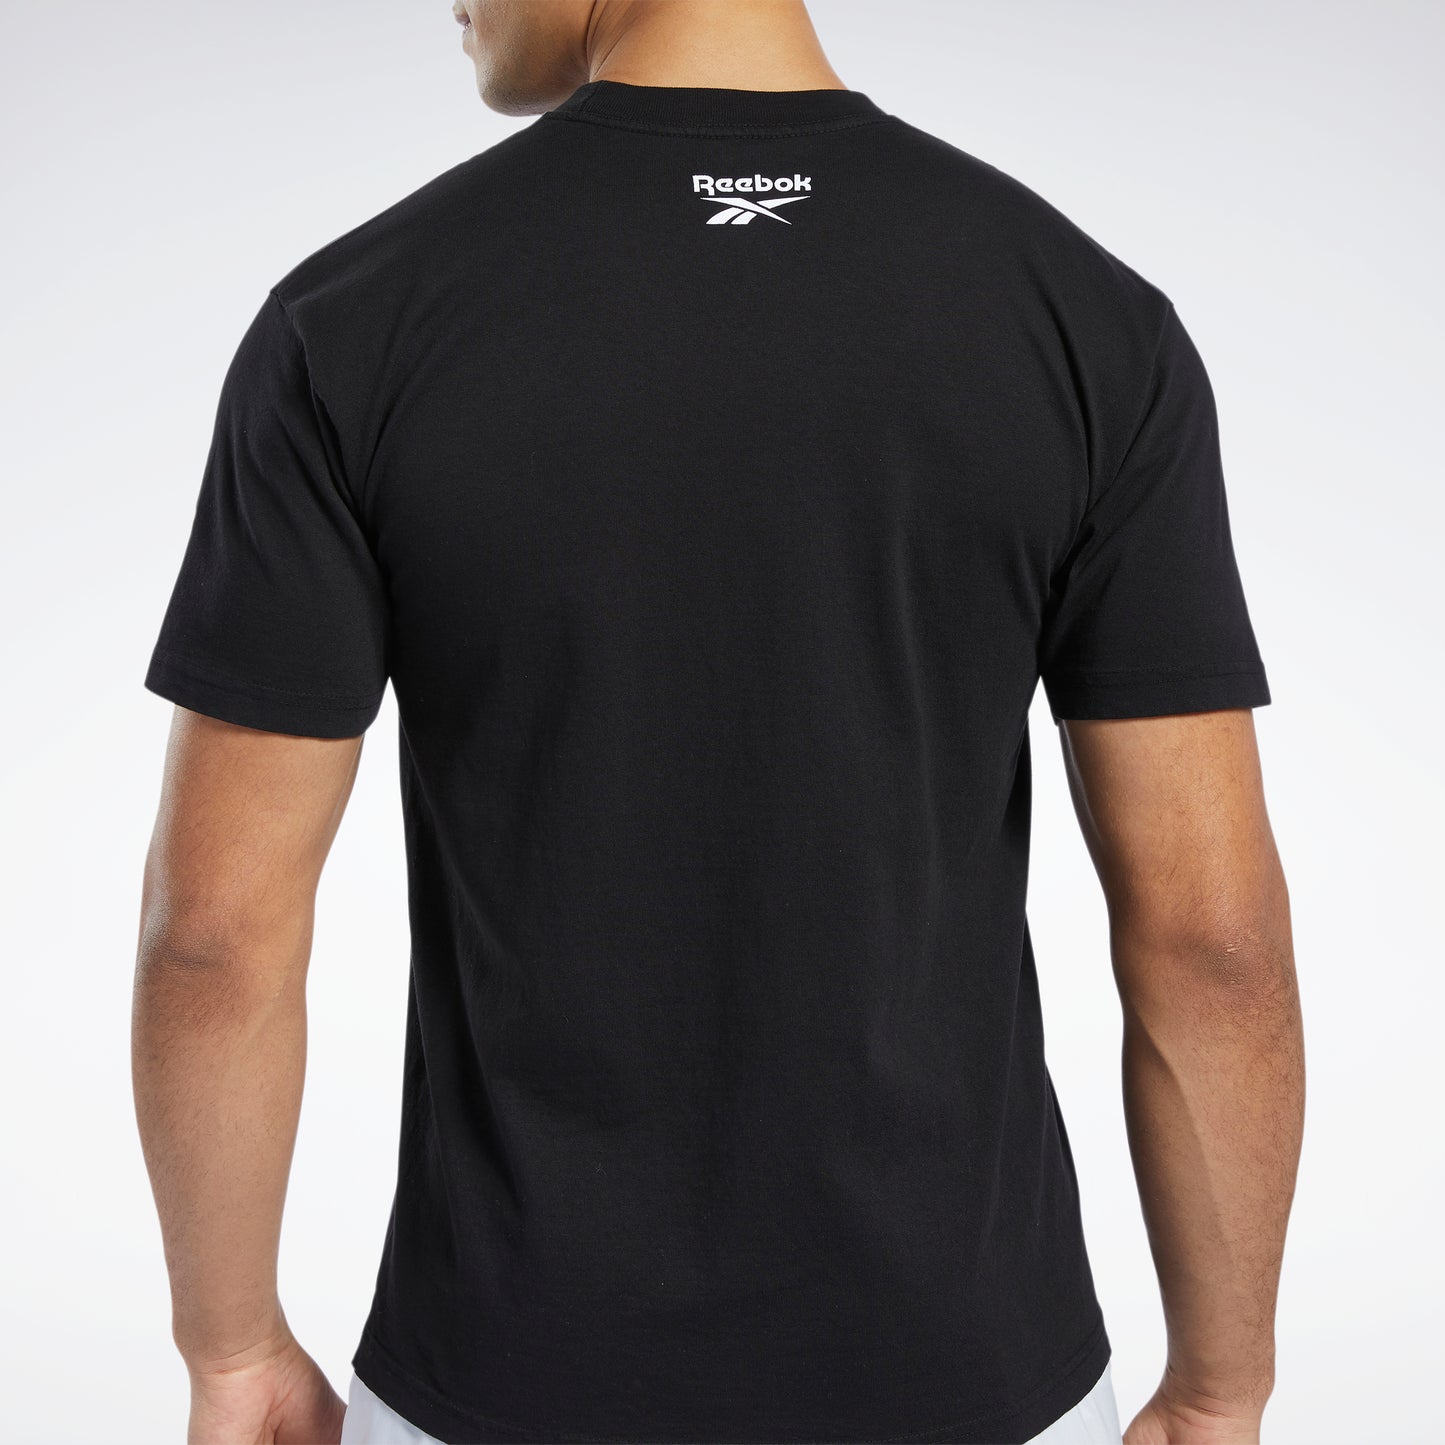 Reebok Apparel Men Allen Iverson Braids T-Shirt Black